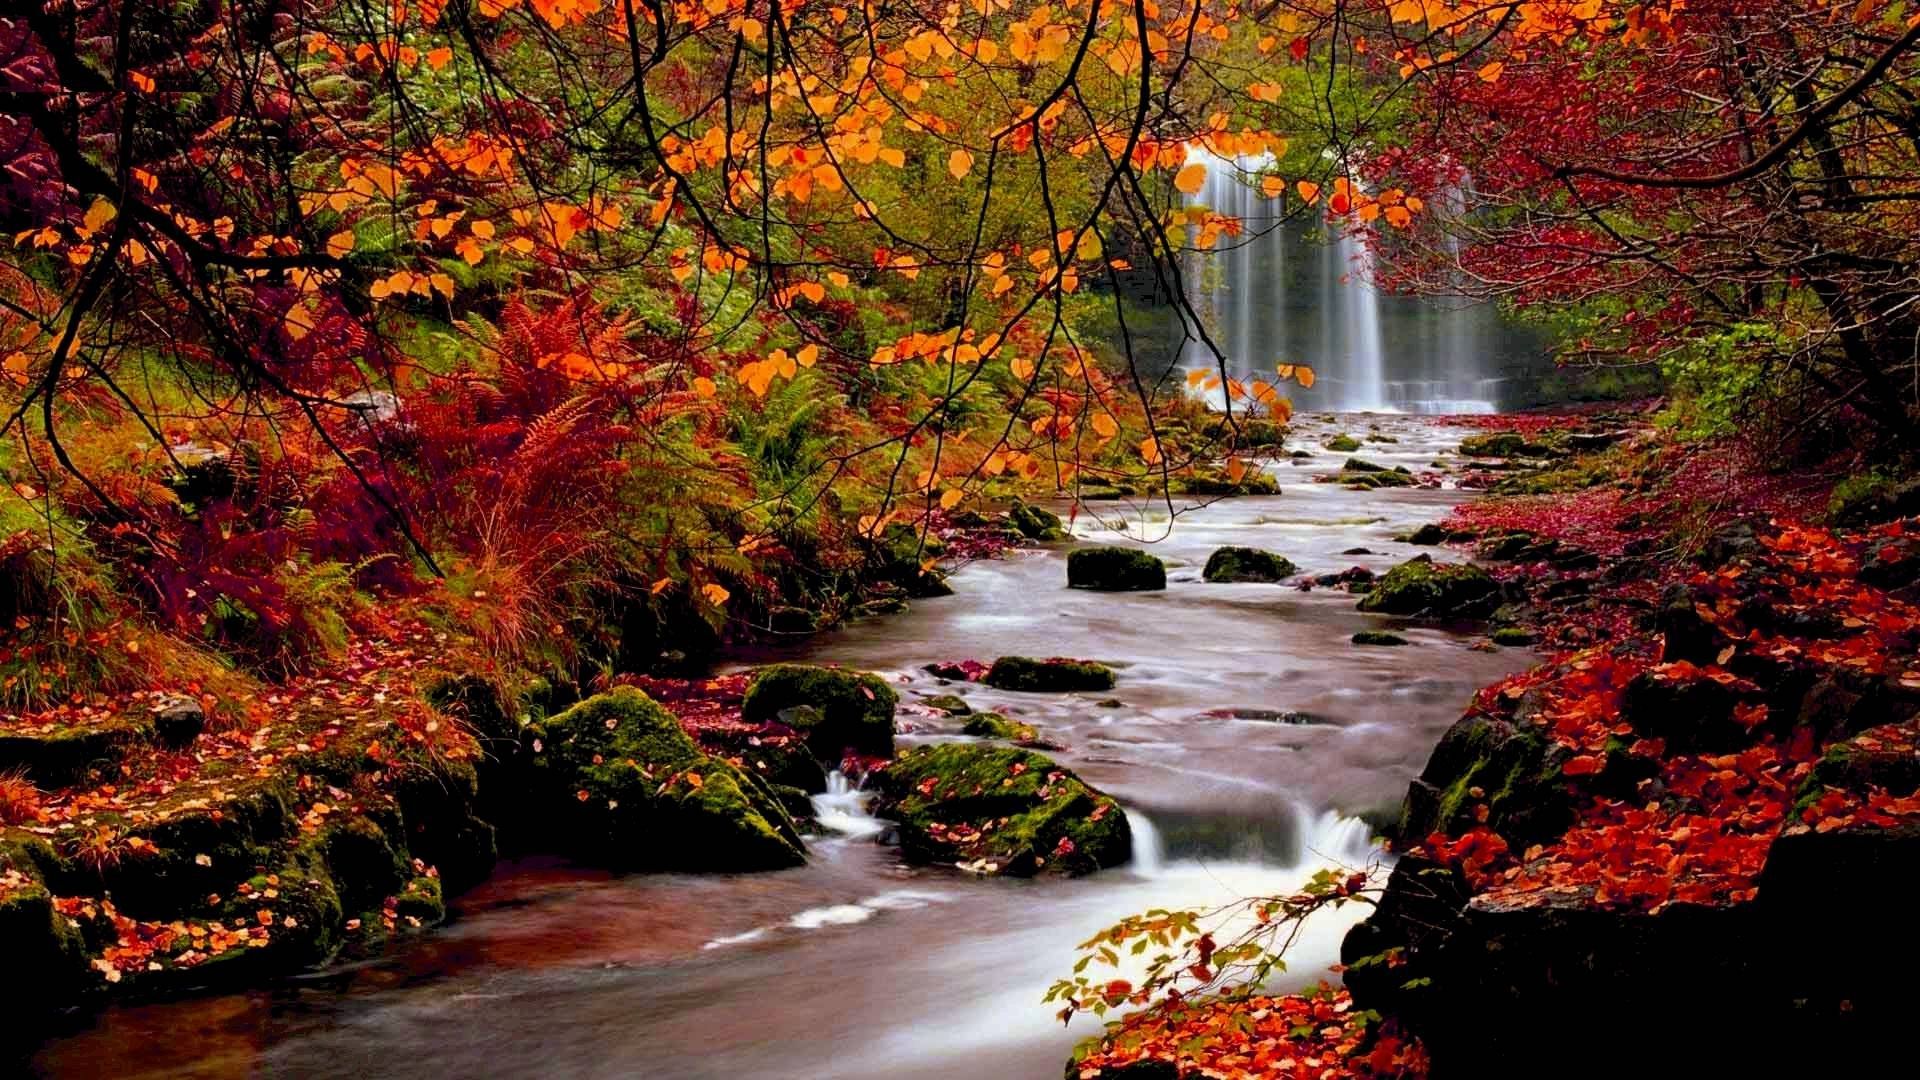 Windows 10 Wallpaper Autumn. mywallpaper site. Desktop wallpaper fall, Autumn scenery, Autumn landscape